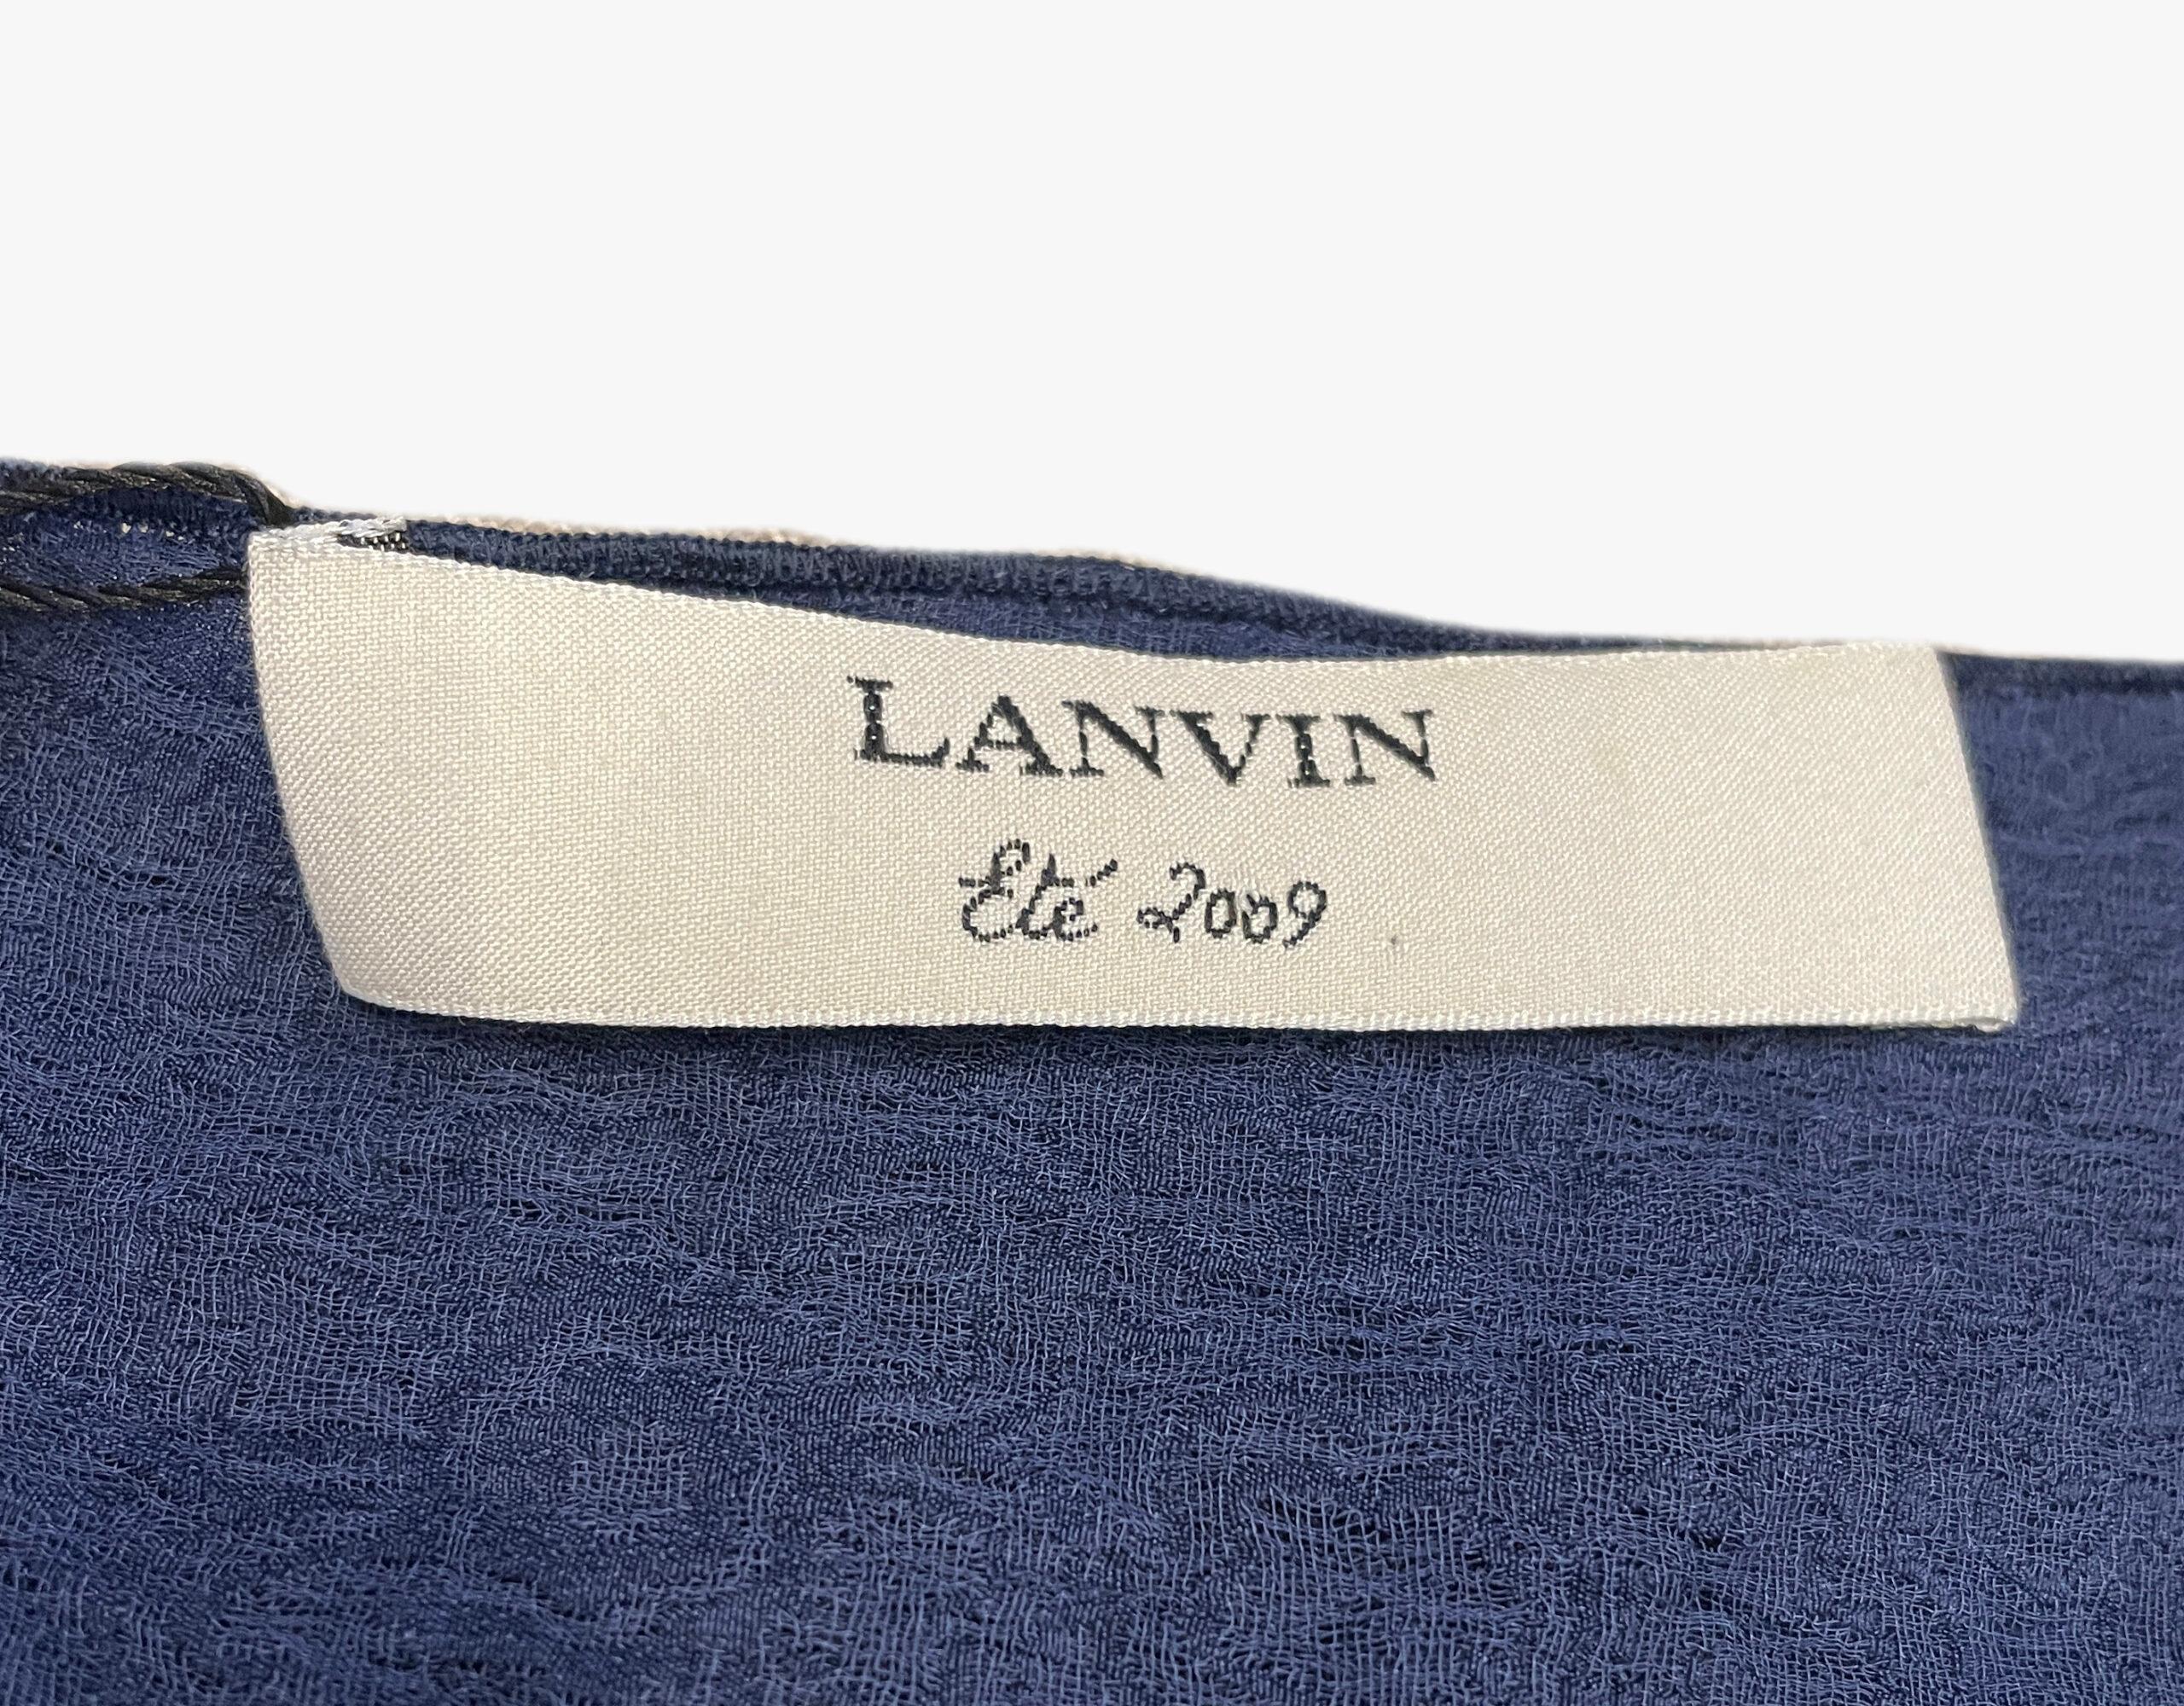 Lanvin Strapless Silk Dress, 2009 For Sale 1